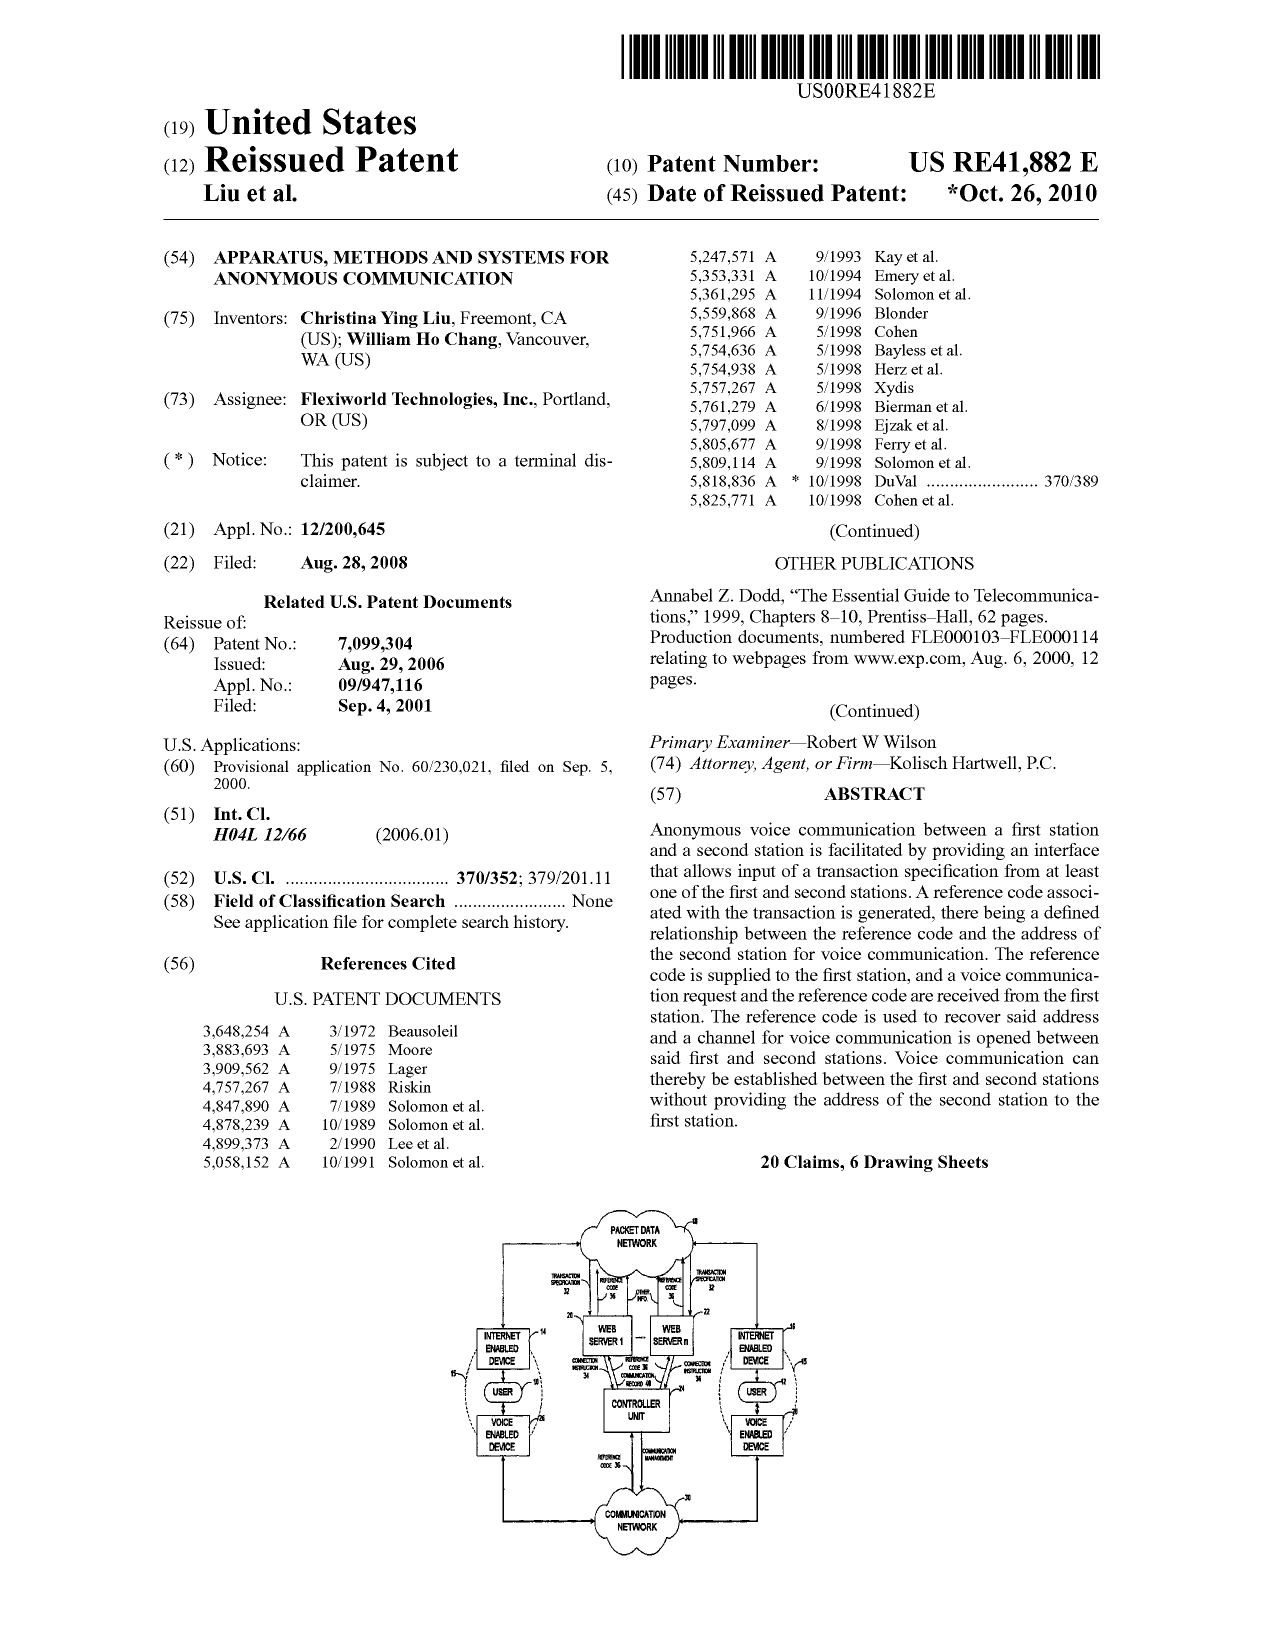 U.S. Patent Number: RE41,882